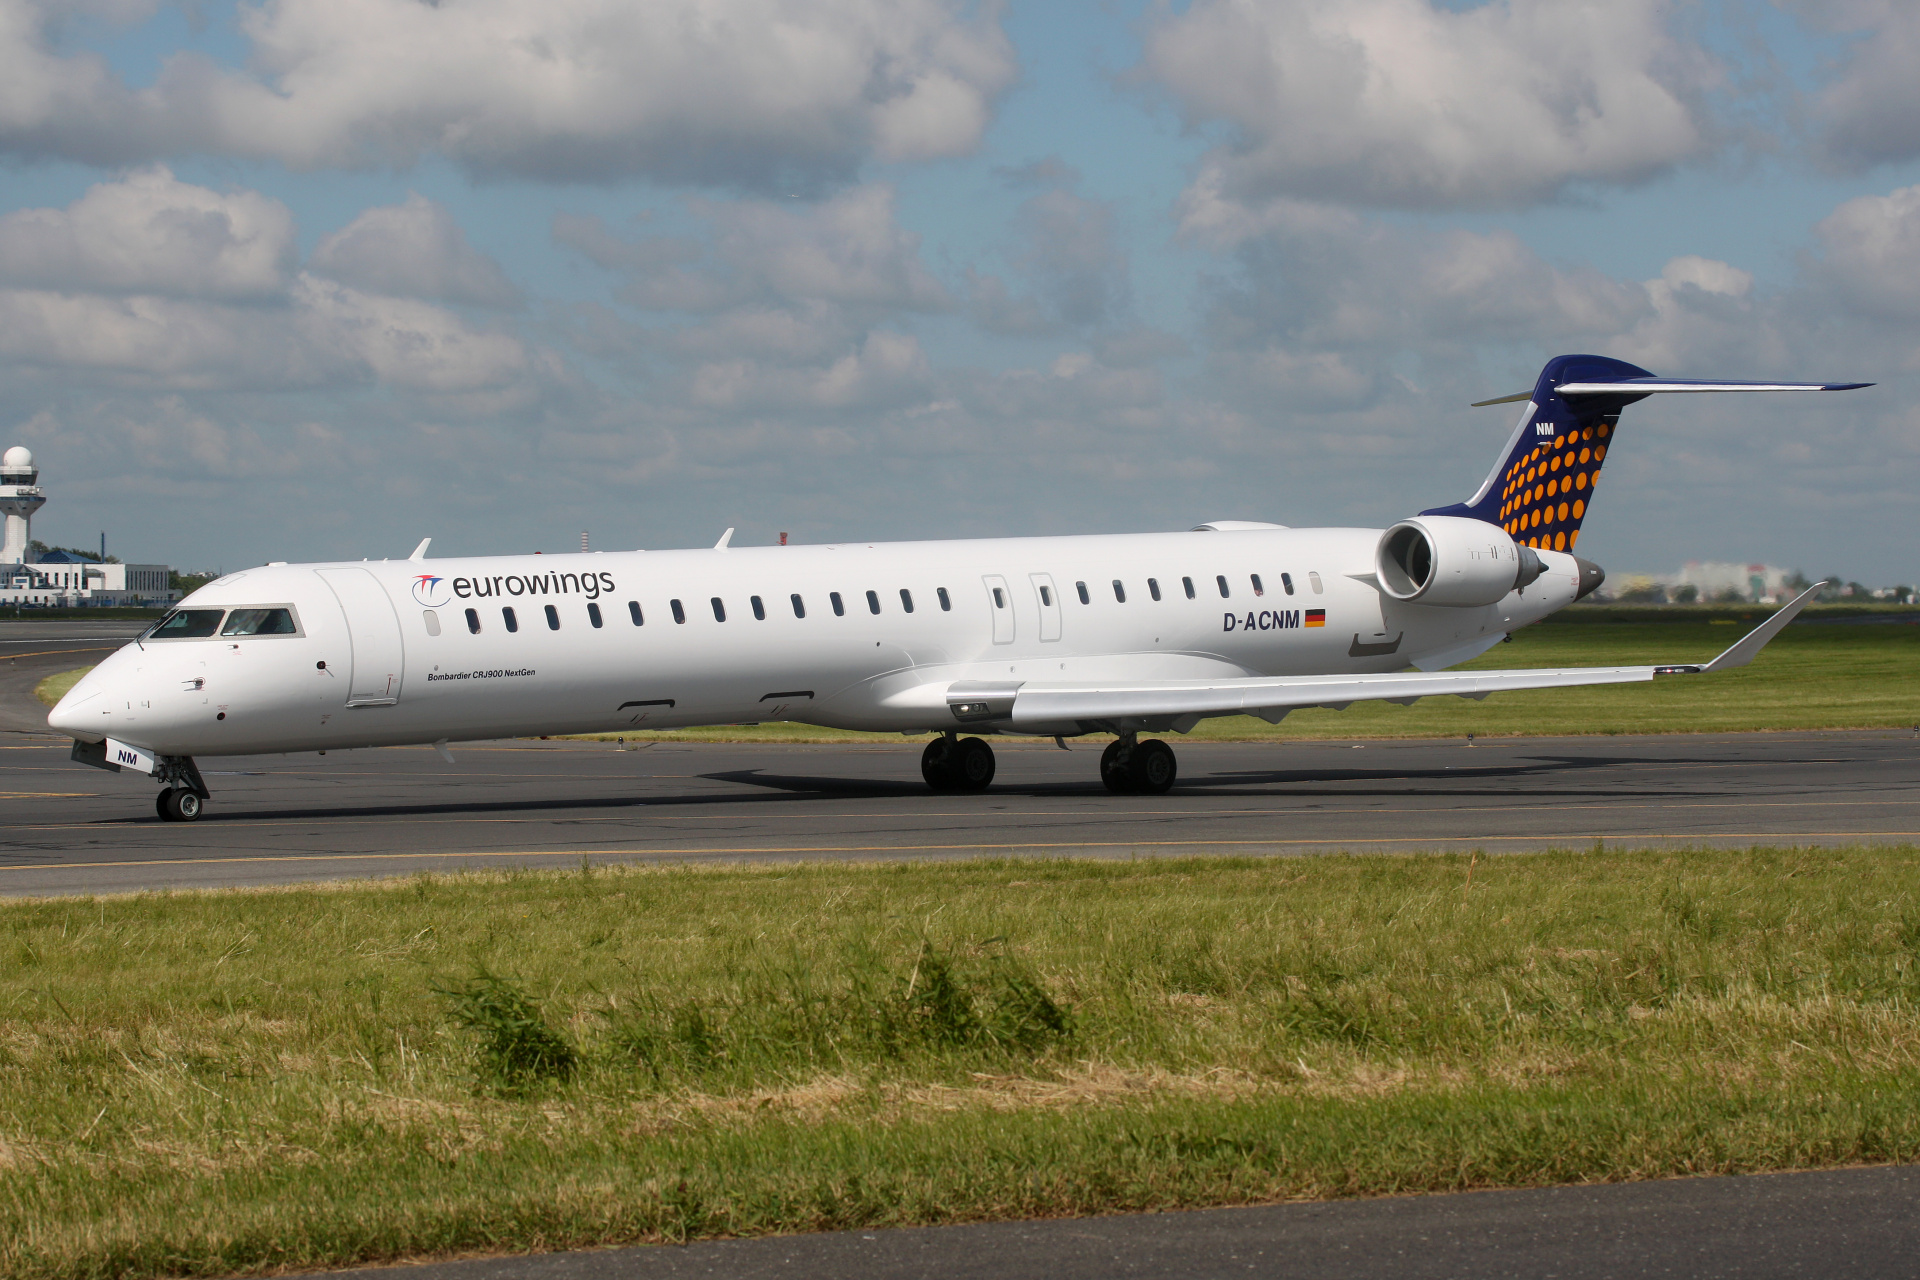 D-ACNM, Eurowings (Aircraft » EPWA Spotting » Mitsubishi Regional Jet » CRJ-900 » Eurowings)